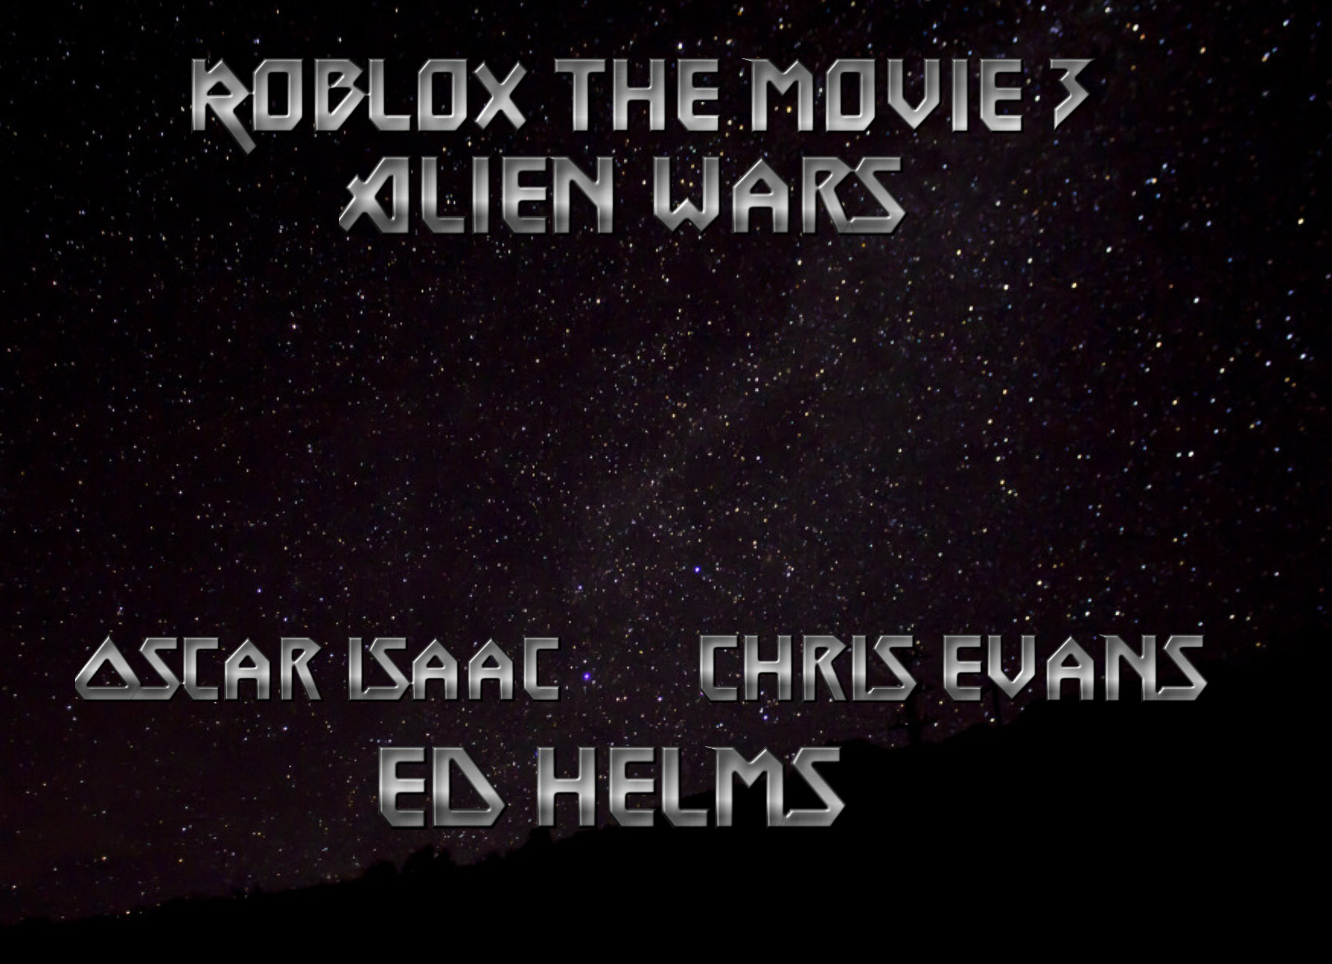 Roblox The Movie 3 Alien Wars Idea Wiki Fandom - roblox movie 2021 cast